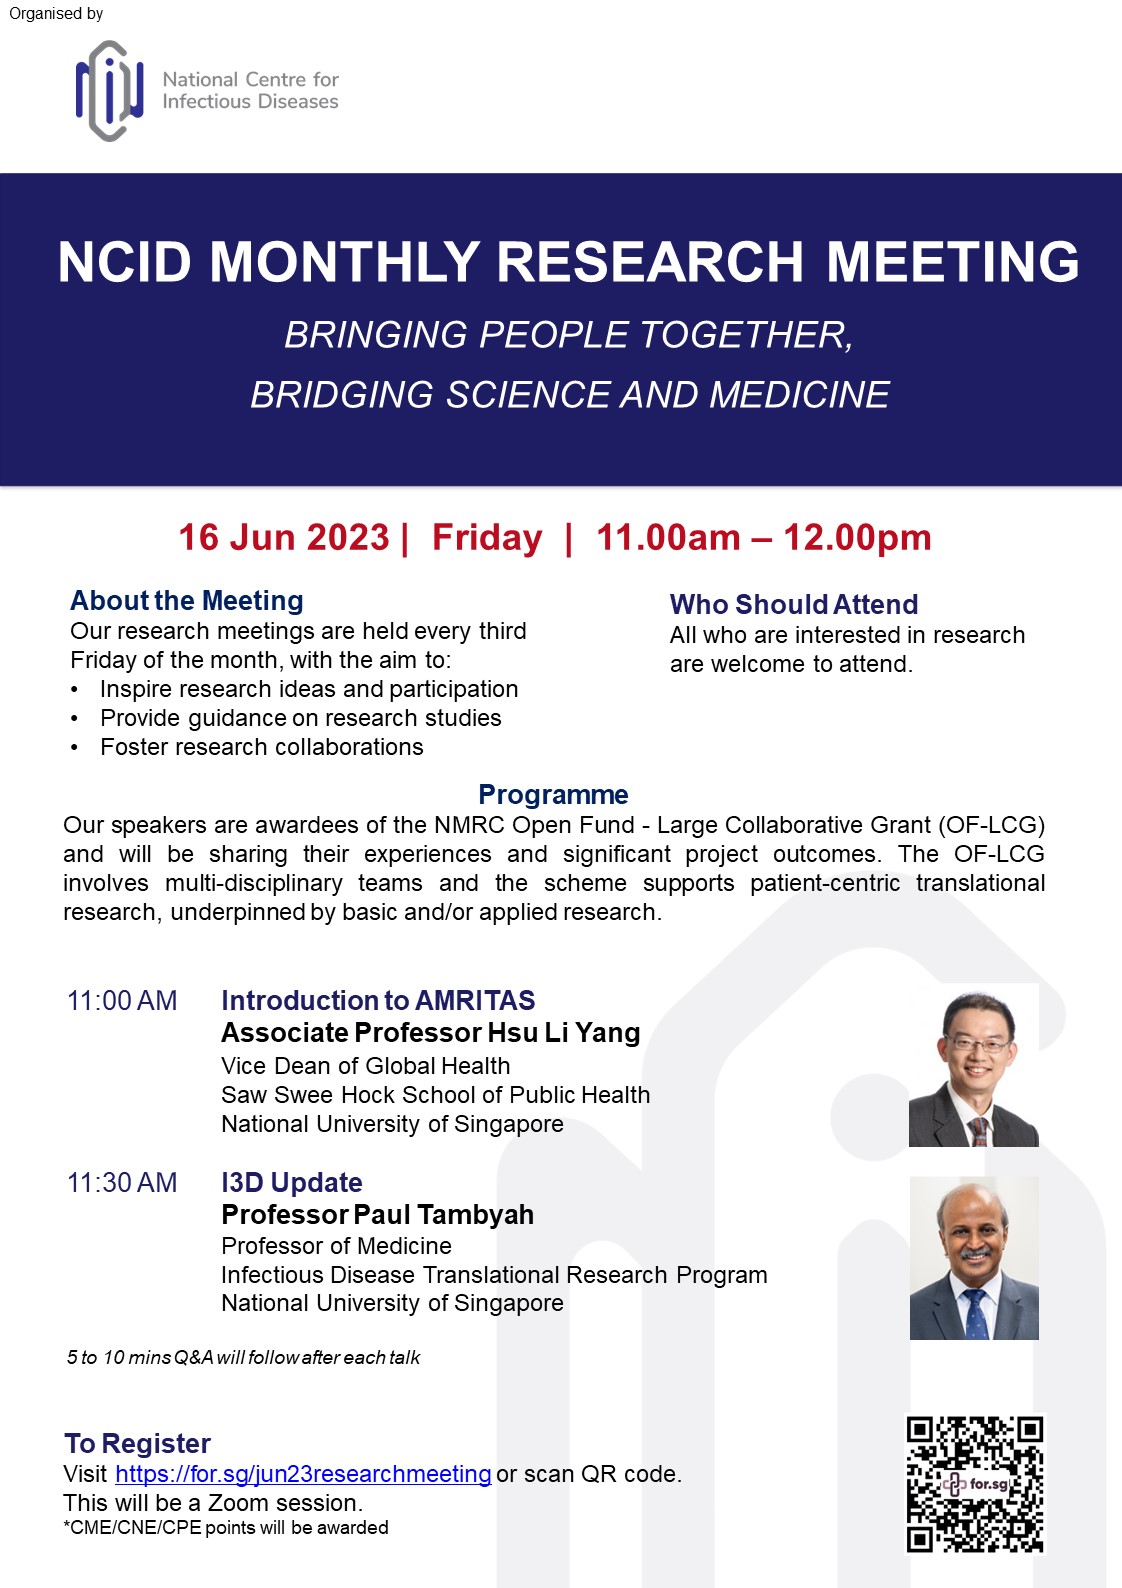 NCID Research Meeting Publicity Poster_Jun2023.jpg